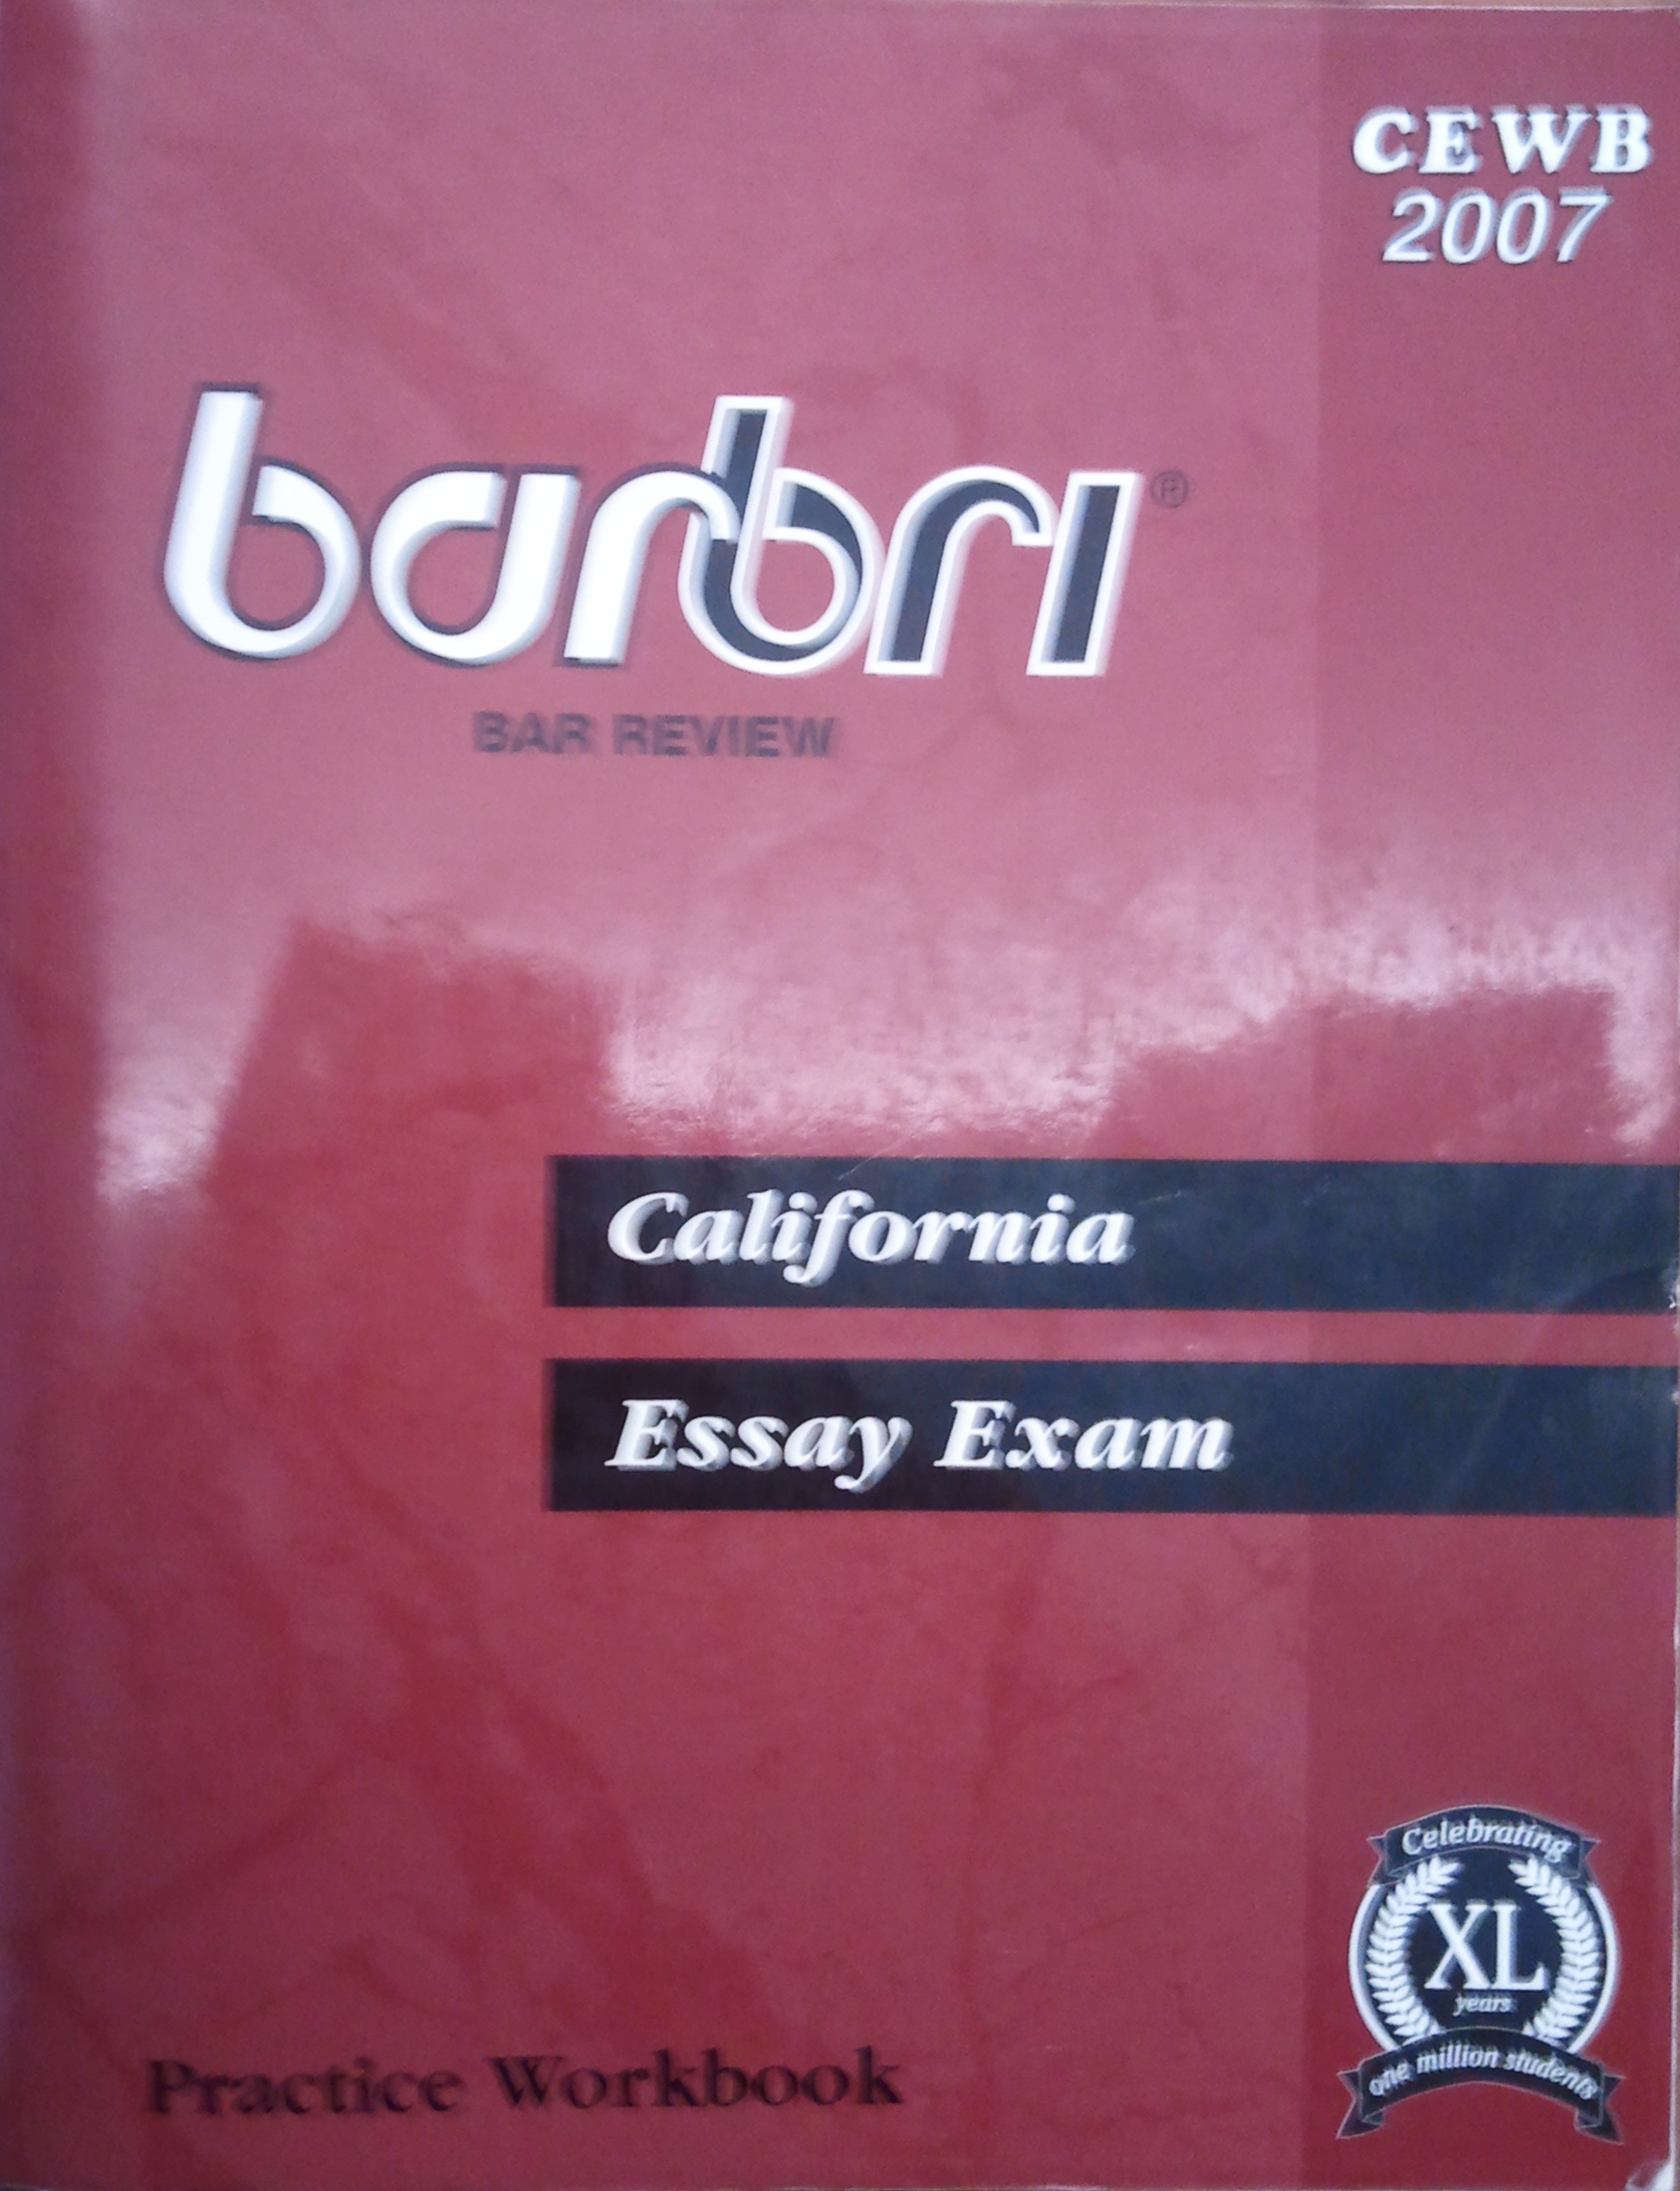 California bar essay preparation